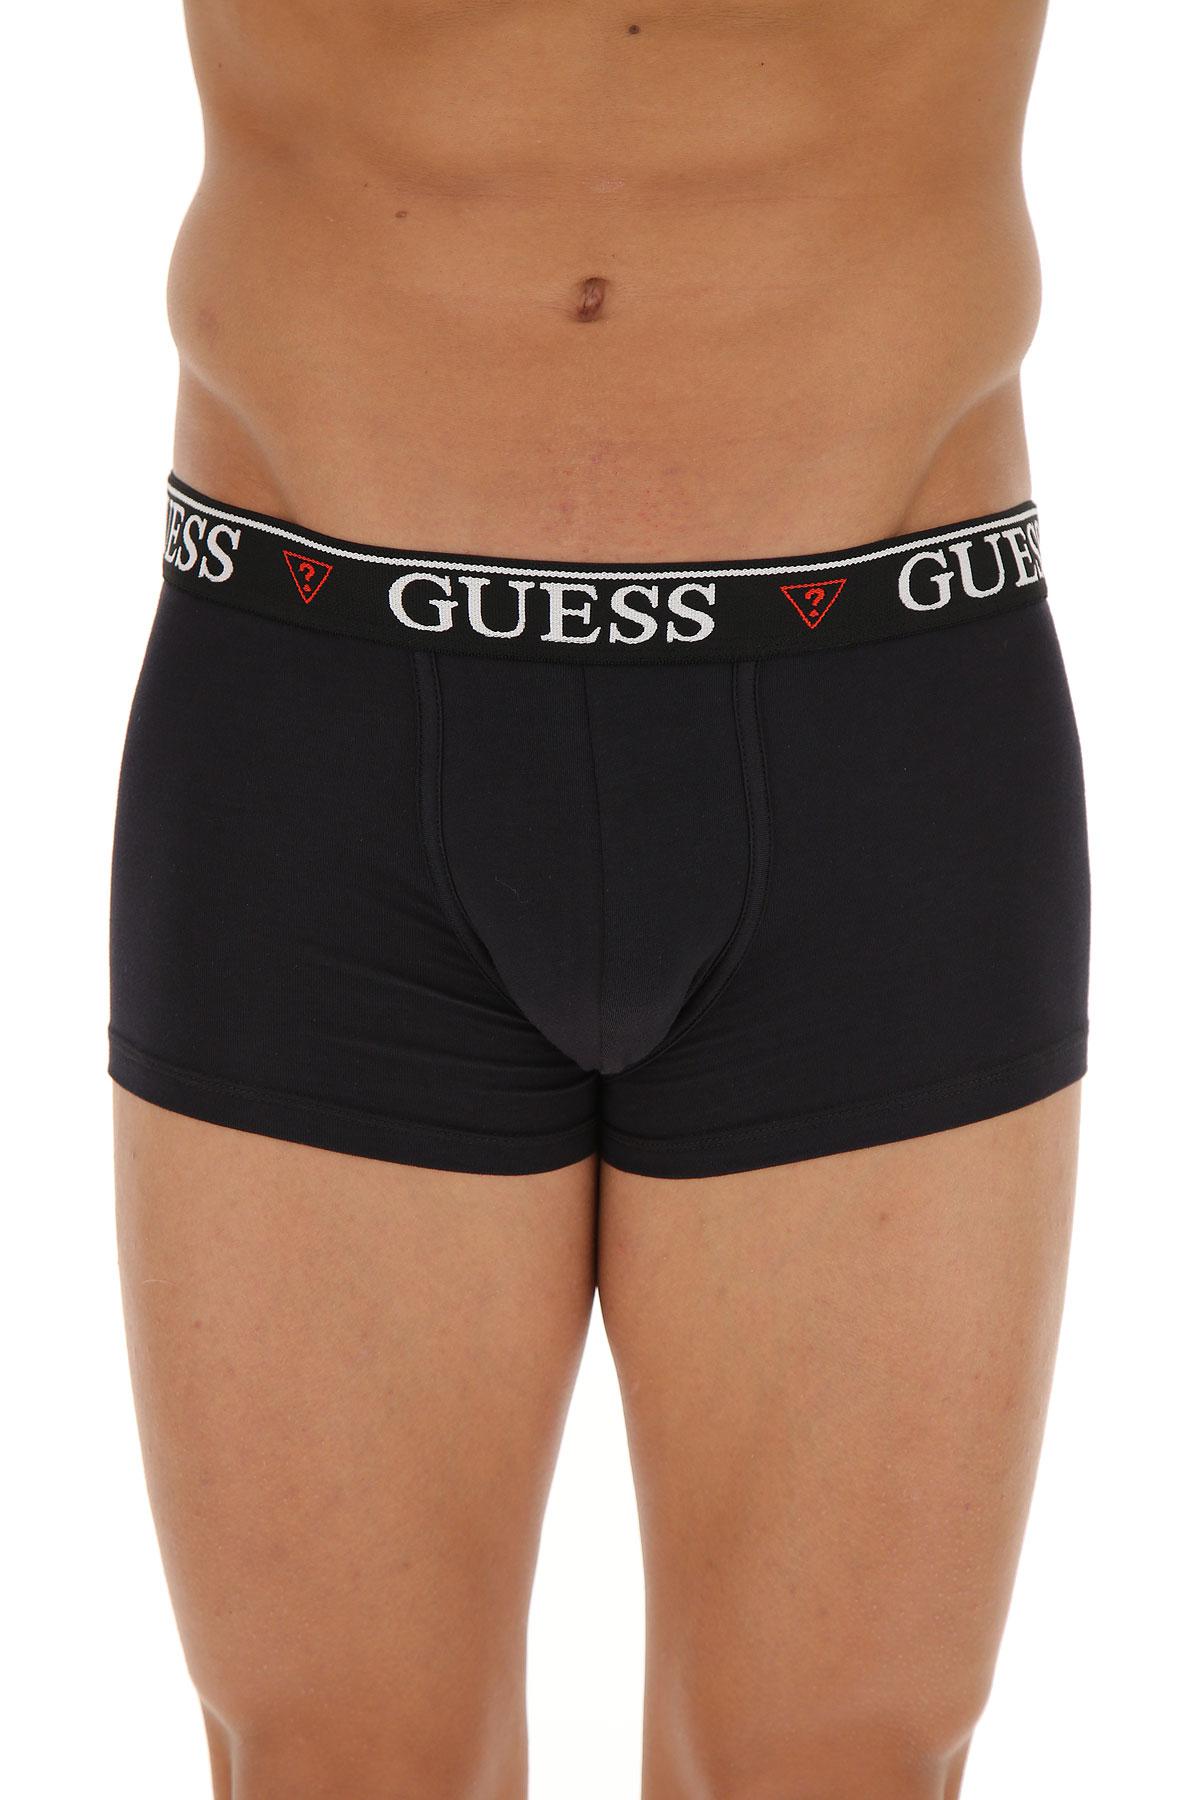 guess underwear men